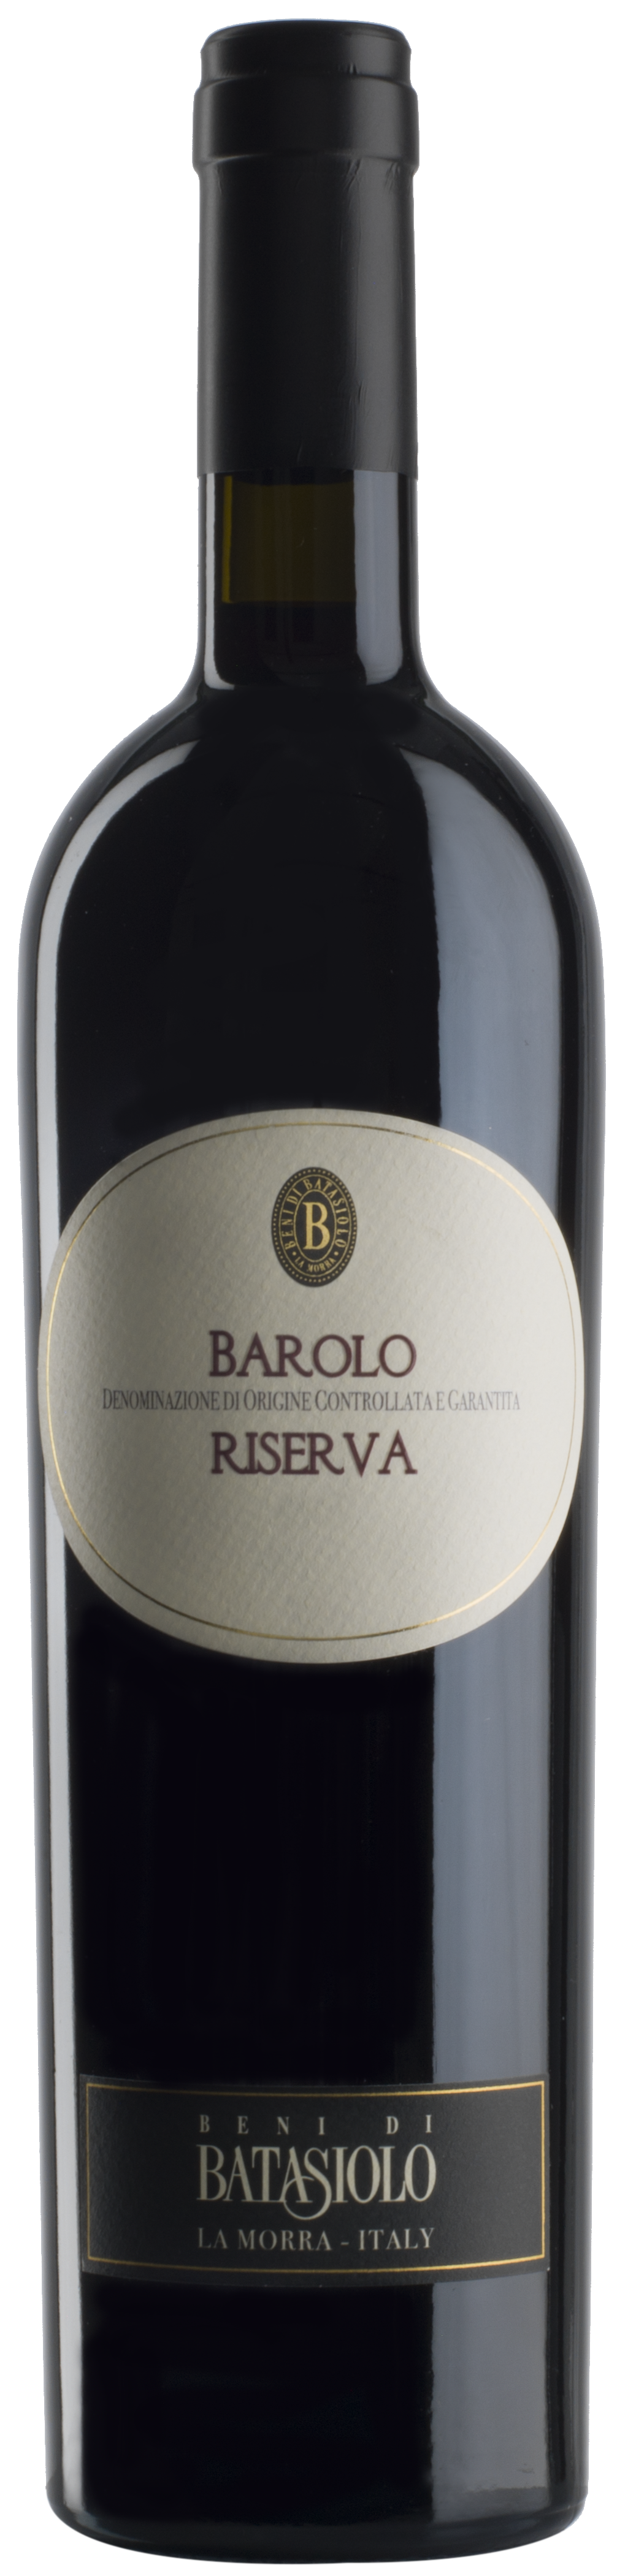 Batasiolo Barolo Riserva 2012 - Piemont - Rotwein trocken - 0,75l - 14,5% vol.